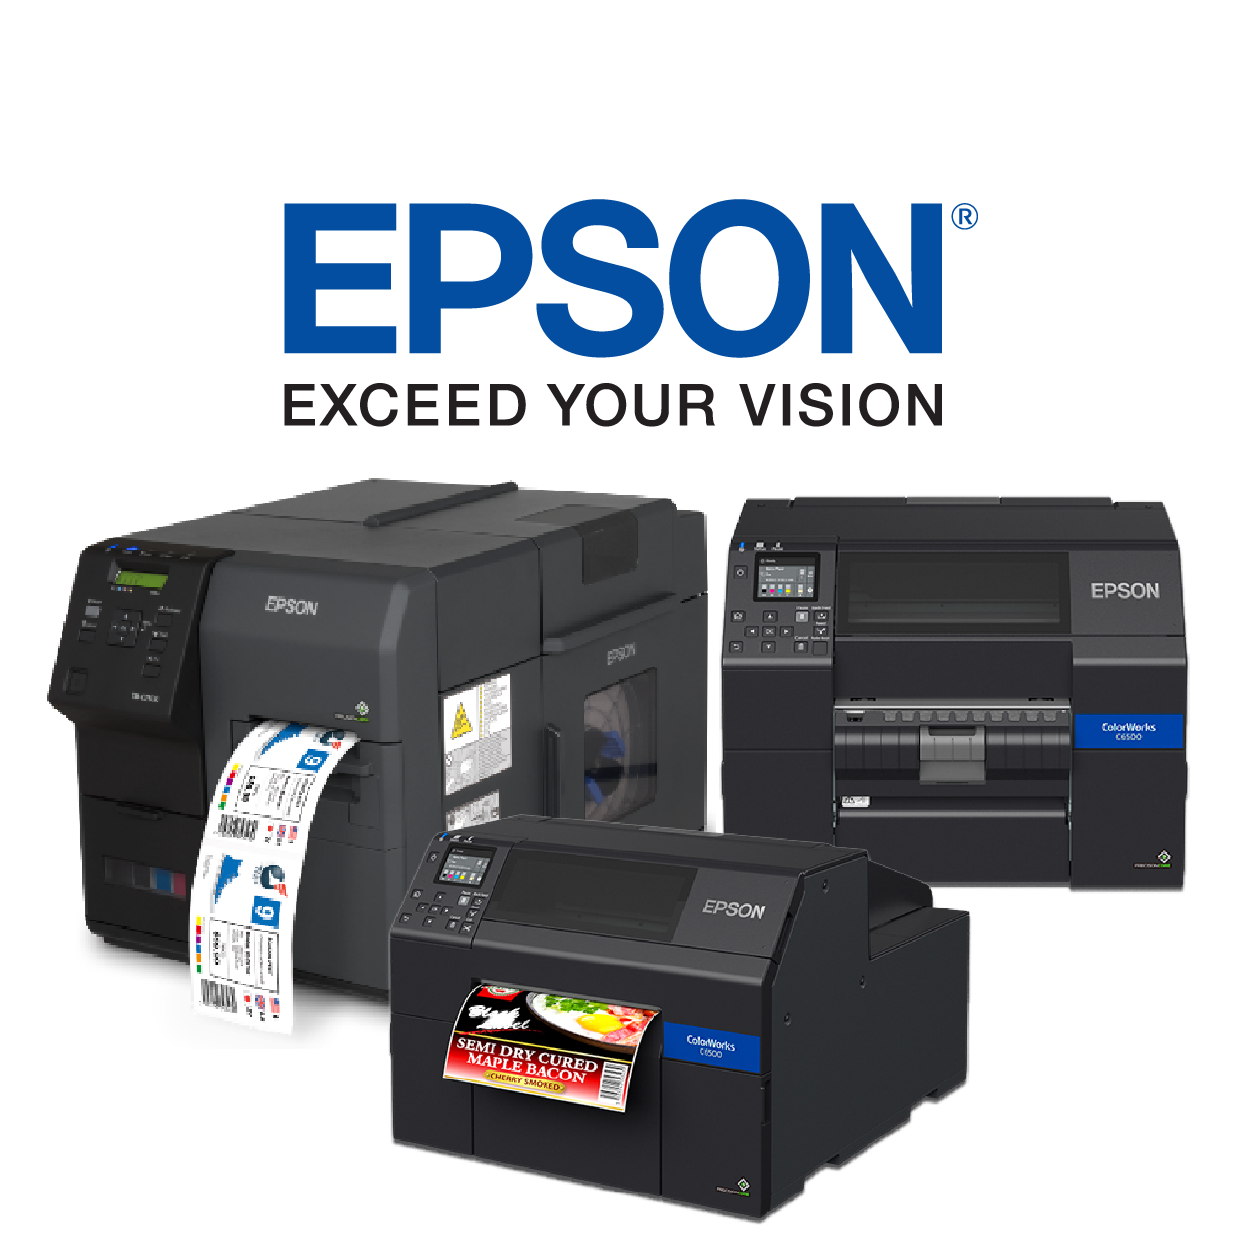 Epson Printers - ICC Canada